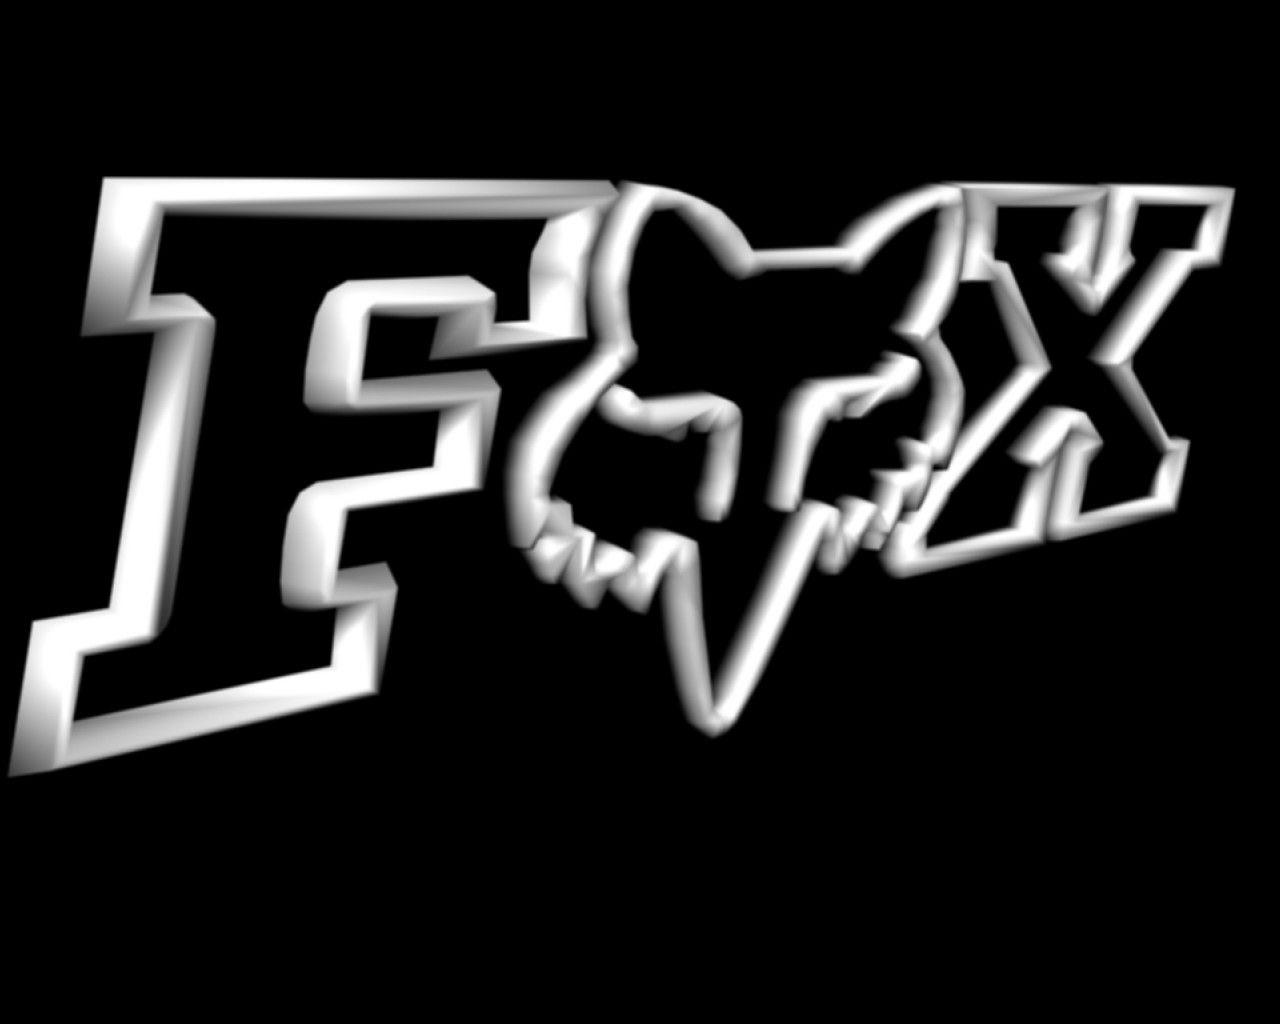 Cool Fox and Monster Logo - Best 34+ Fox Racing Monster Energy Backgrounds on HipWallpaper ...